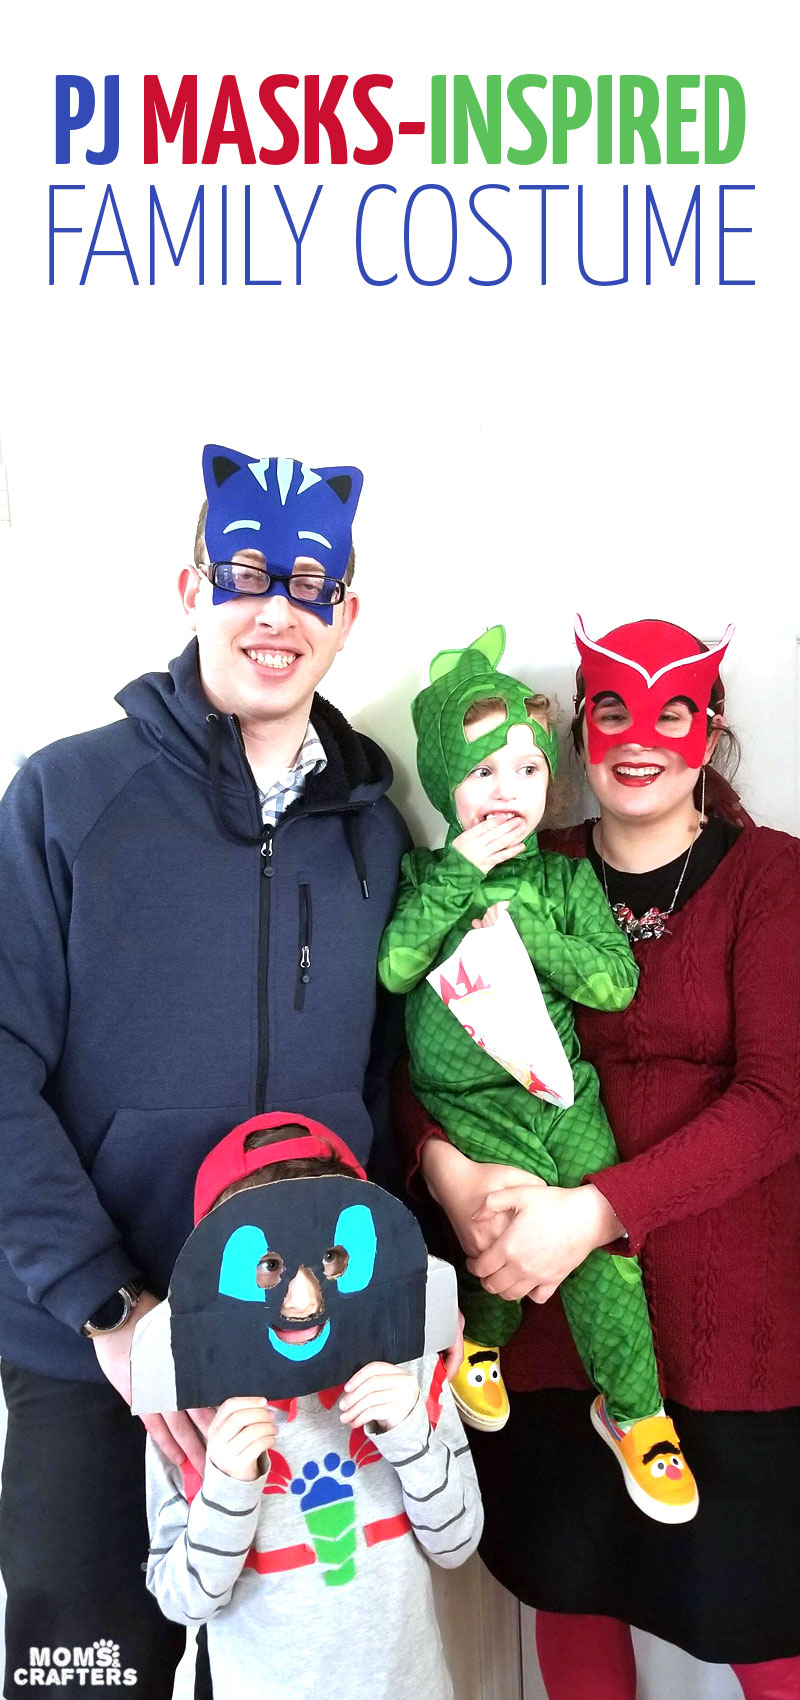 PJ Masks Family Costume - Make Owlette, Catboy masks and more!